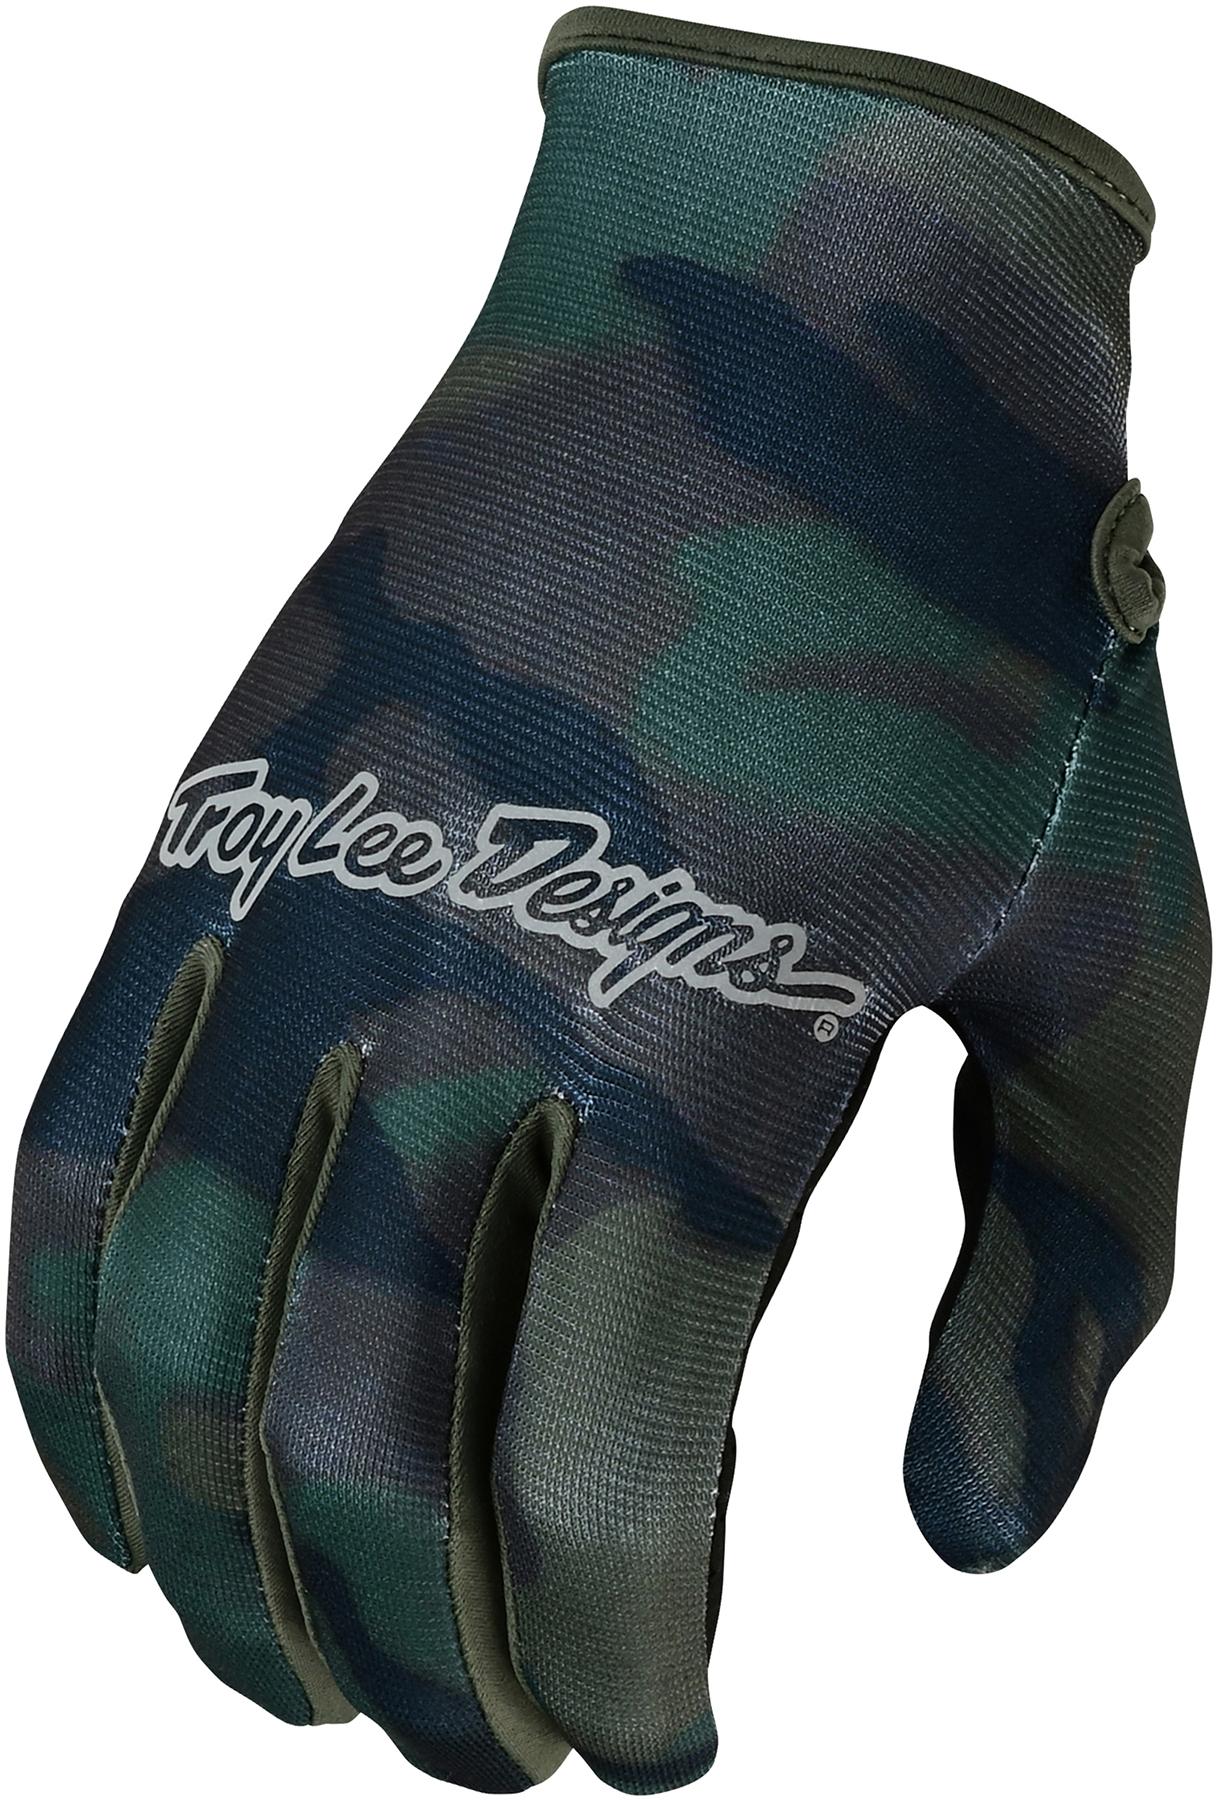 Troy Lee Designs Flowline Gloves  Army Green